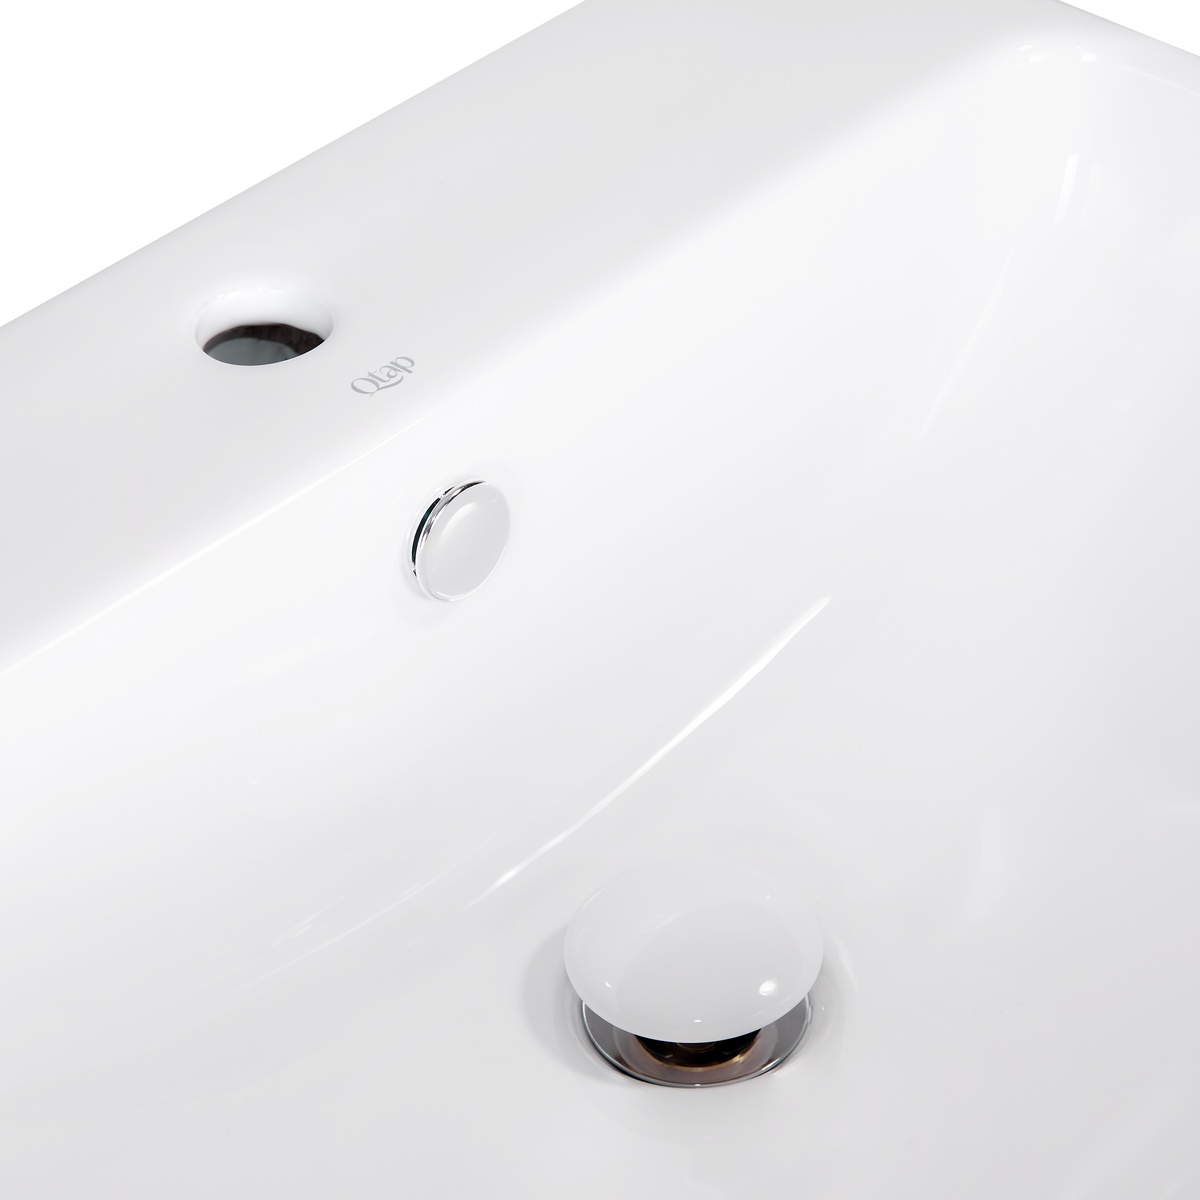 Раковина подвесная для ванны 540мм x 460мм Q-TAP Leo белый прямоугольная QT111101GW